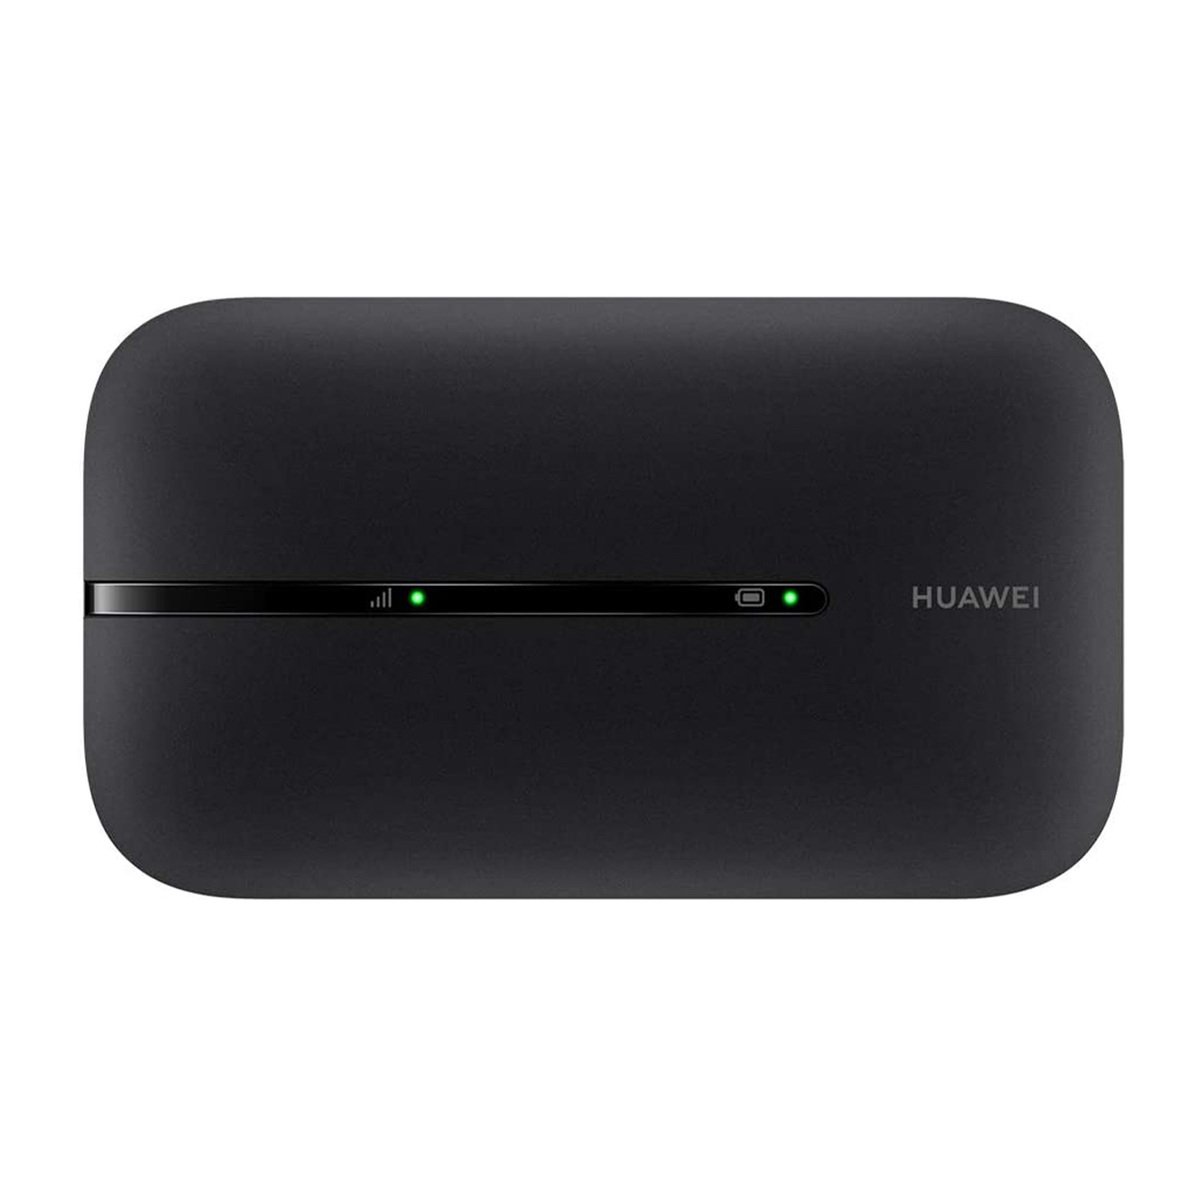 Huw 4G Mobile Router E5576-856 Black